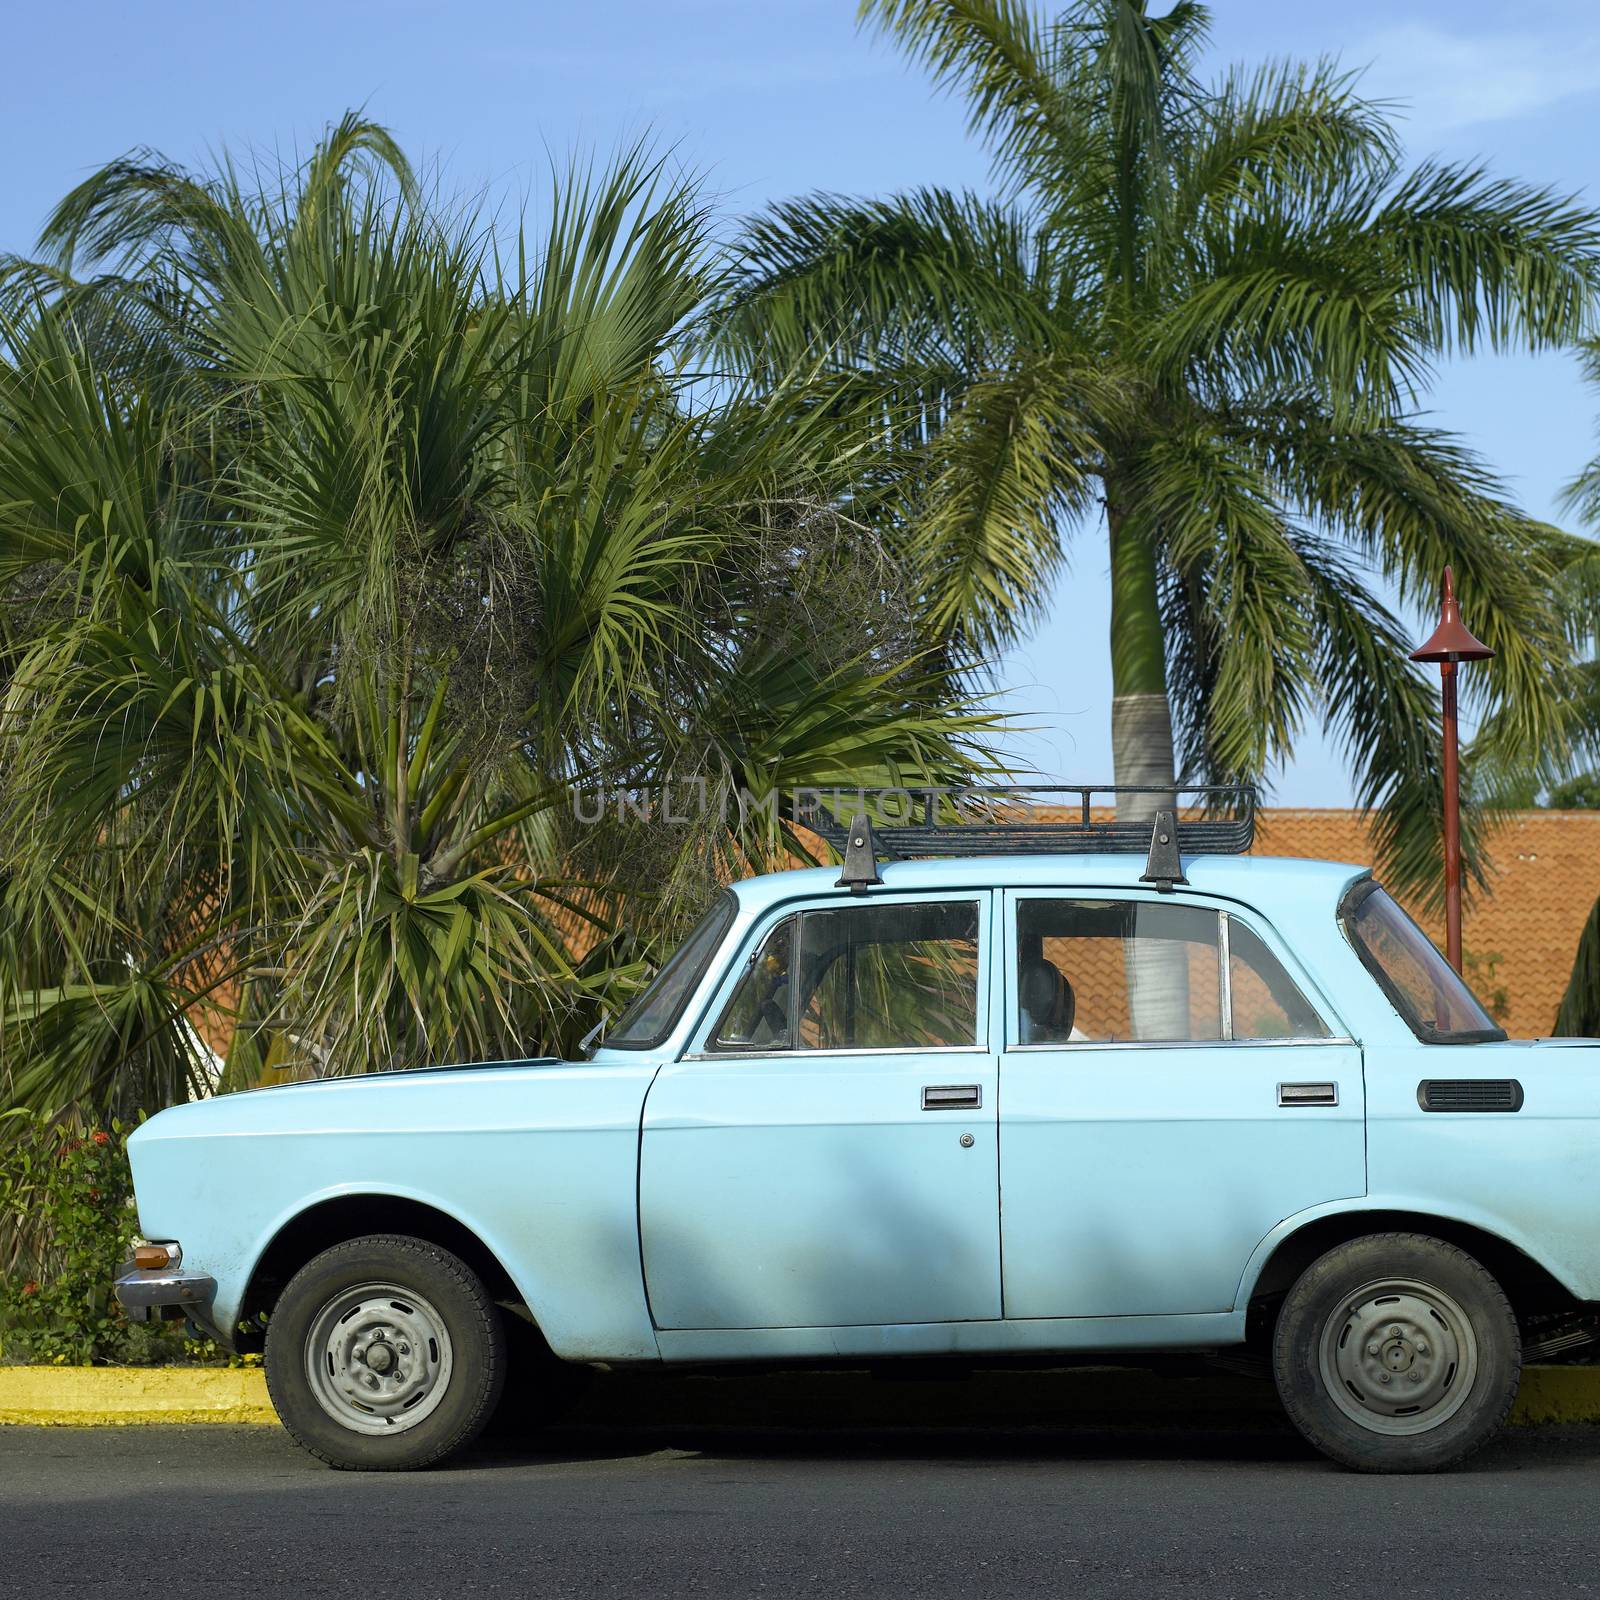 Cute vintage blue car near the yard of a house in a tropical location